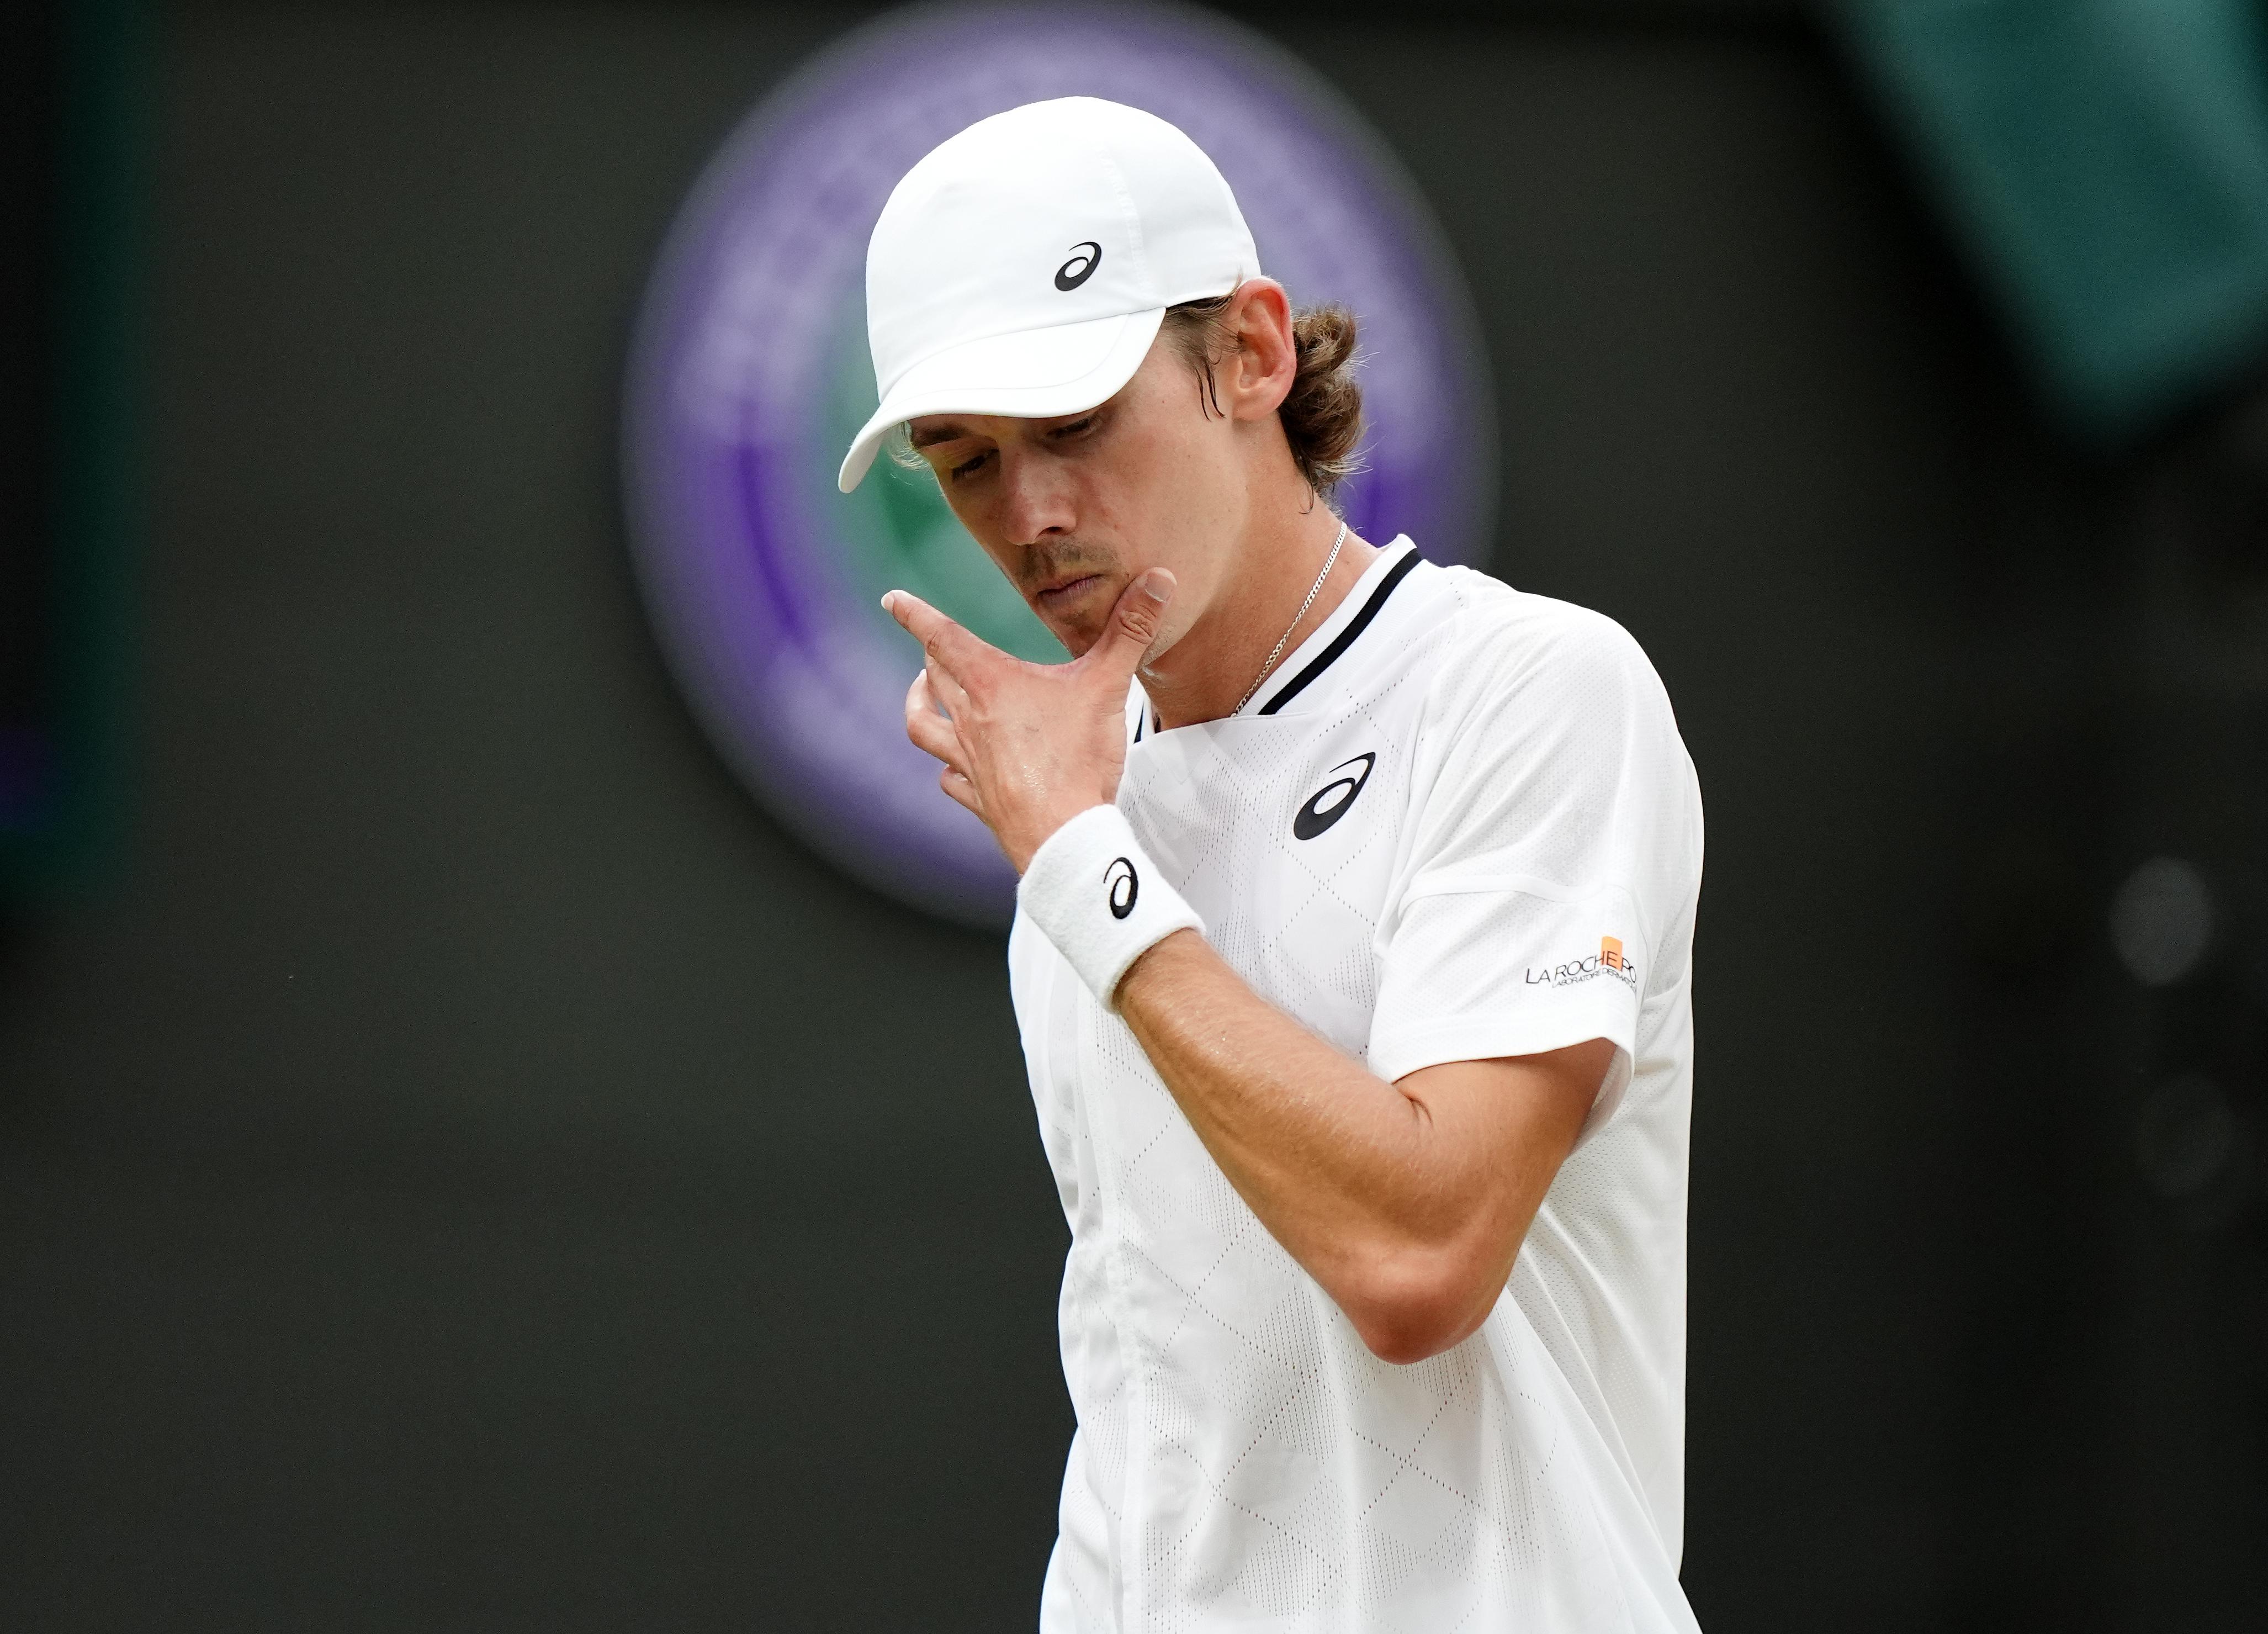 Wimbledon - De Minaur si ritira per infortunio: Djokovic in semifinale senza giocare